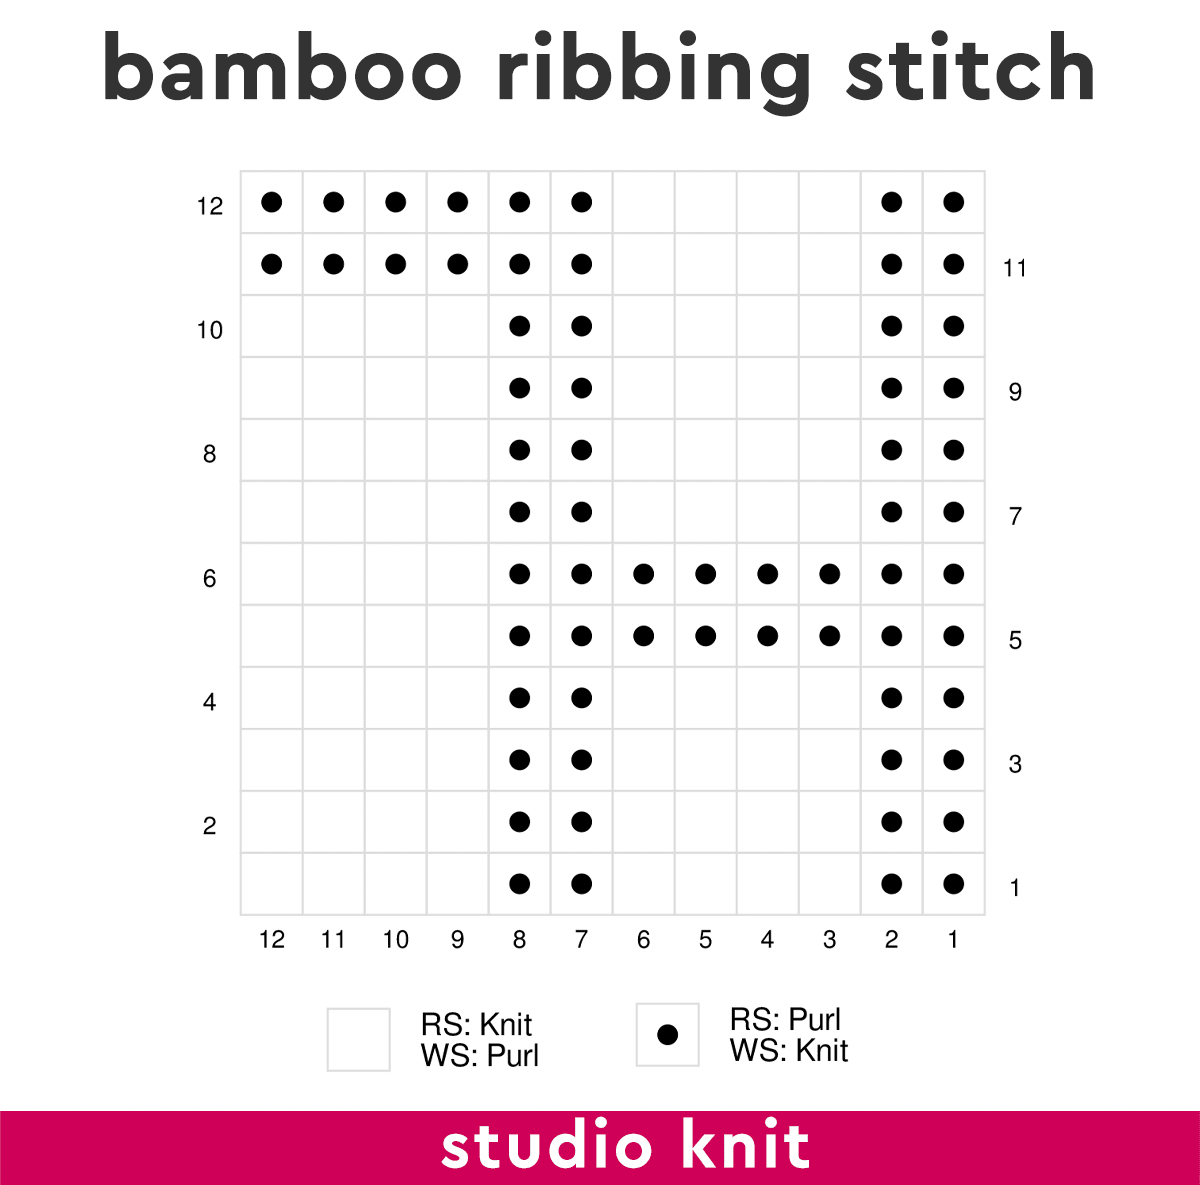 Knitting chart for the bamboo ribbing stitch pattern.